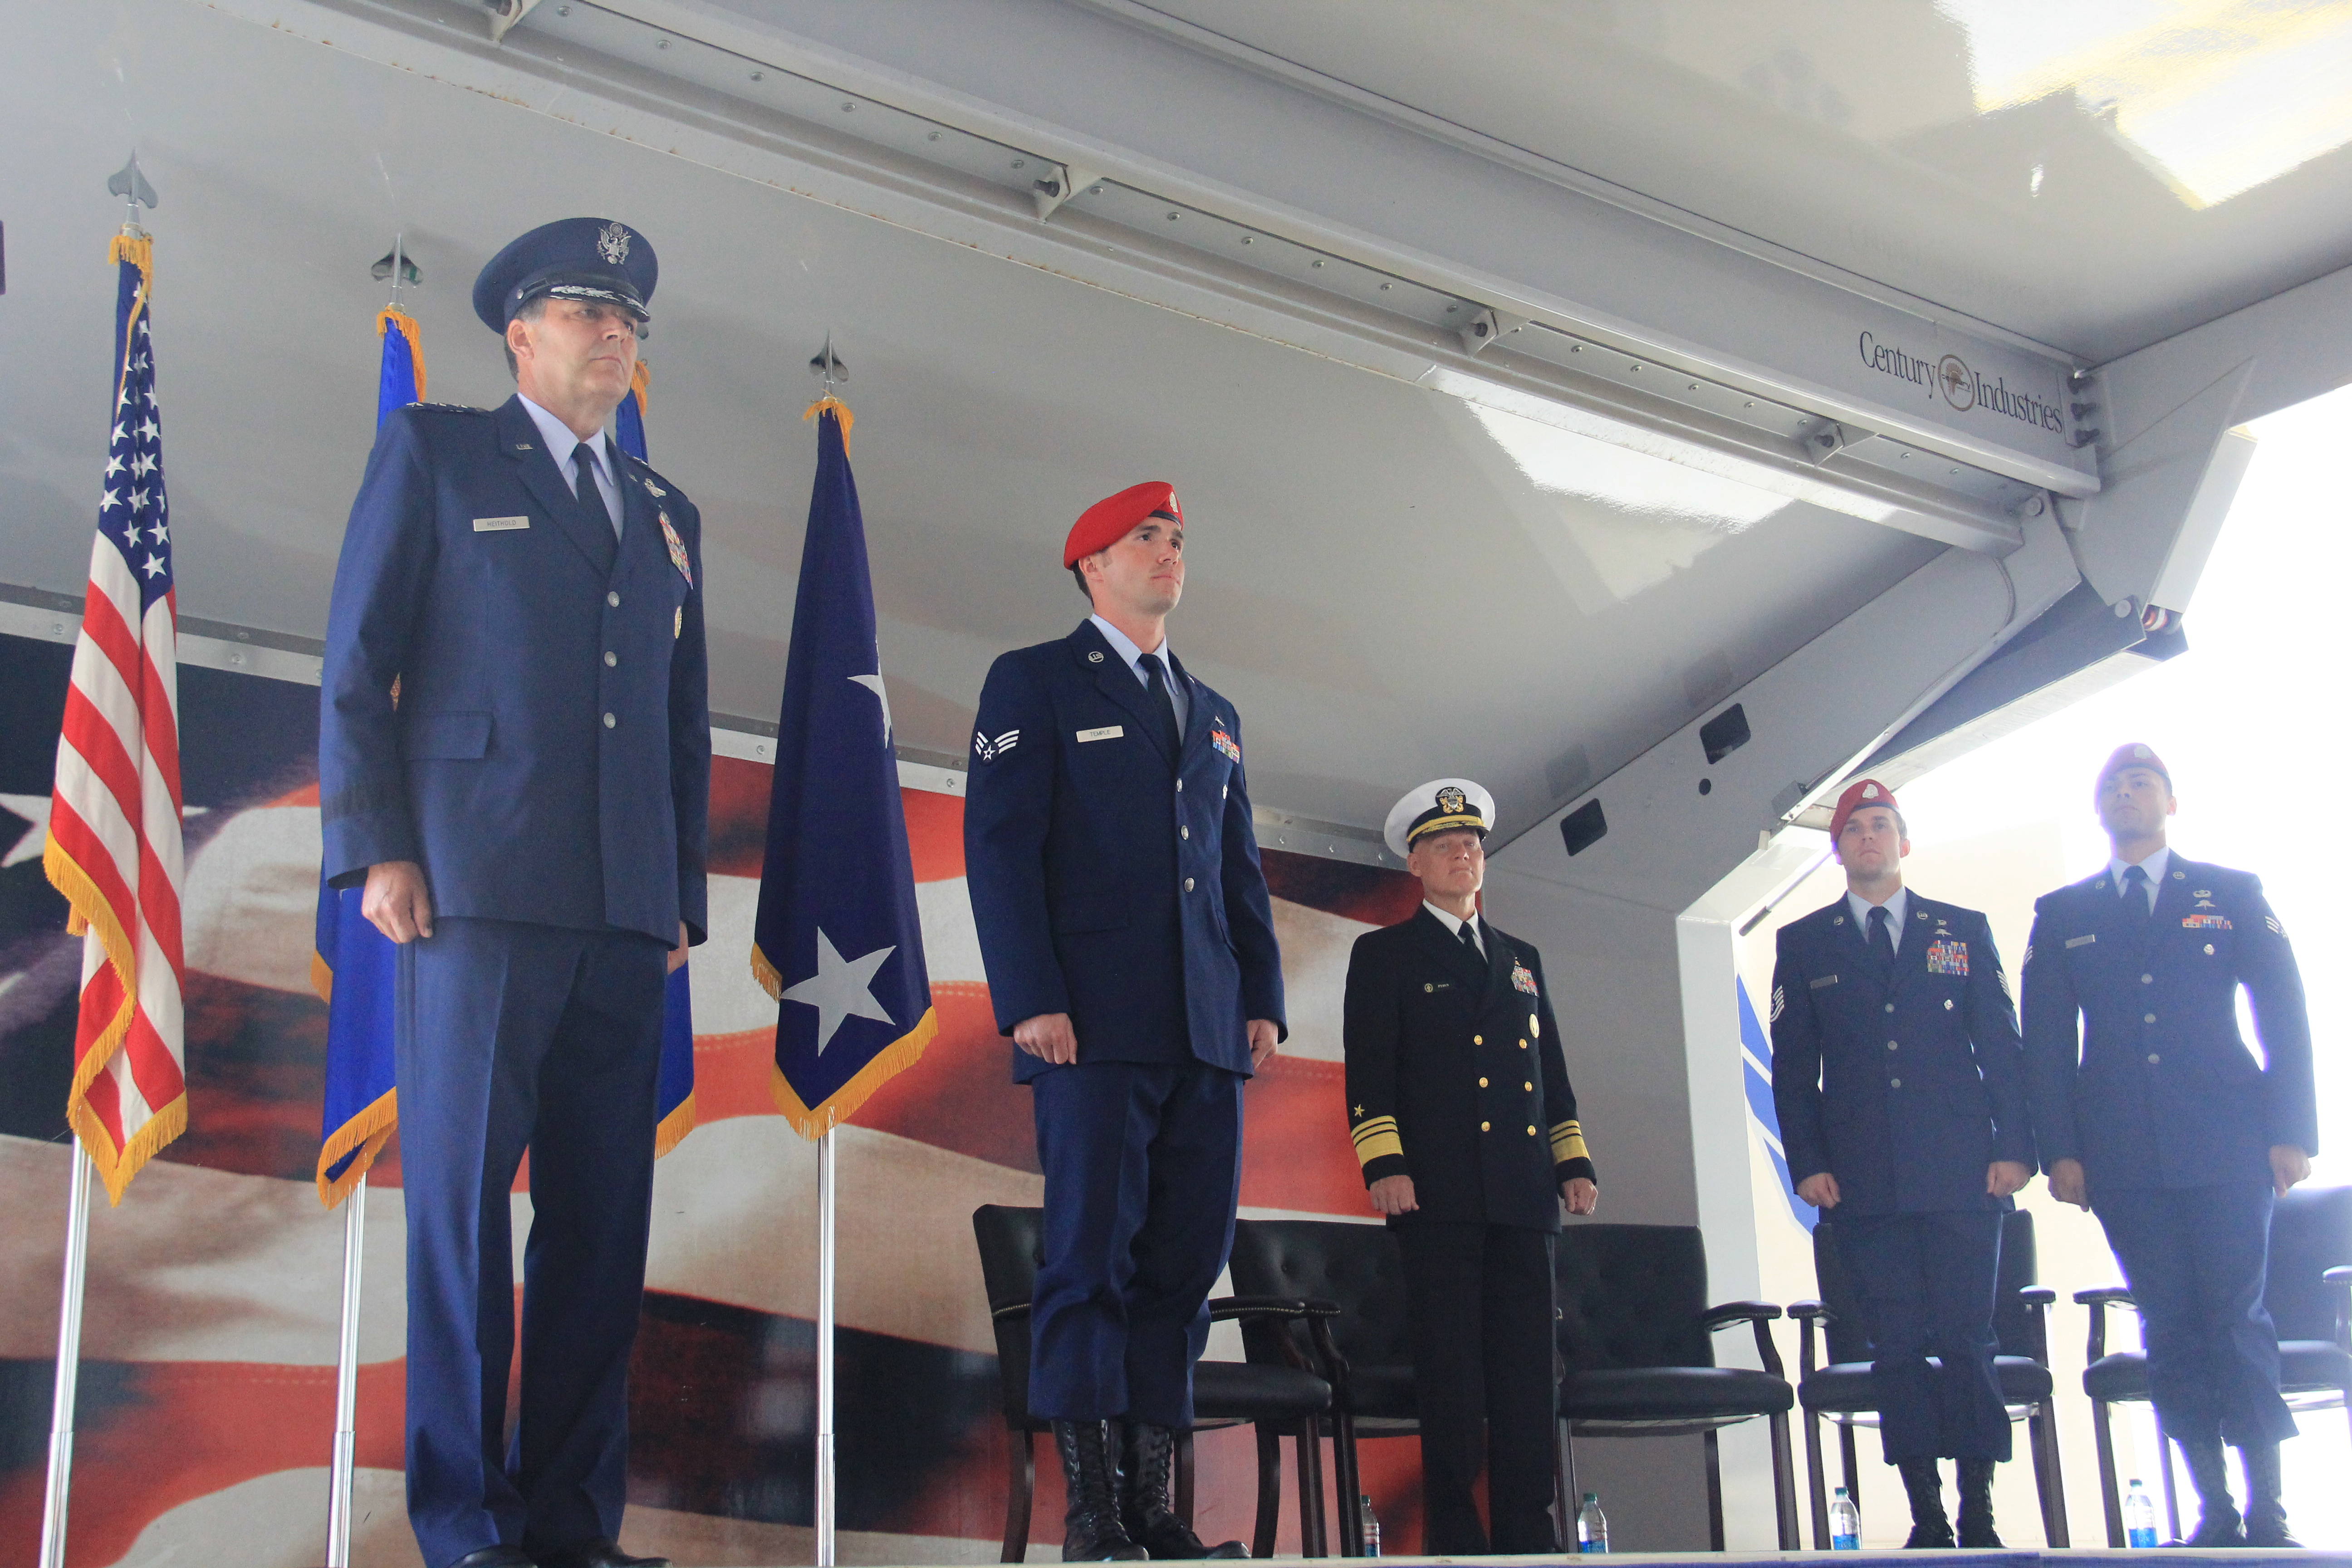 Valor in combat: Airmen honored